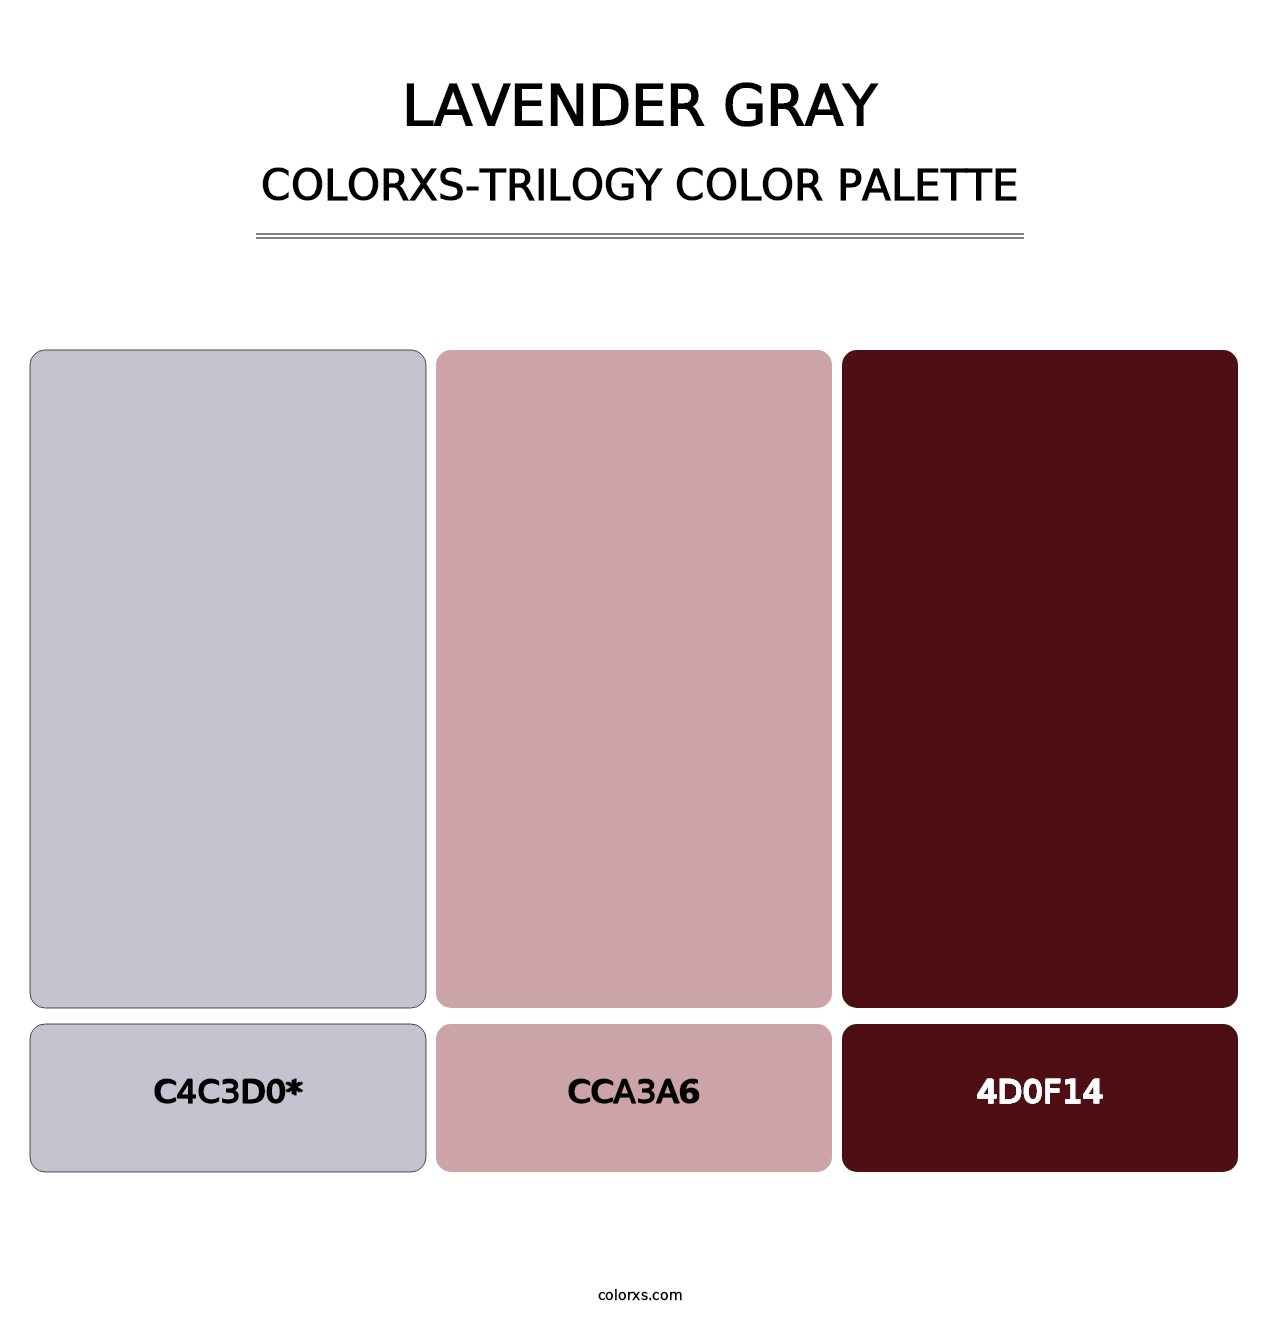 Lavender Gray - Colorxs Trilogy Palette